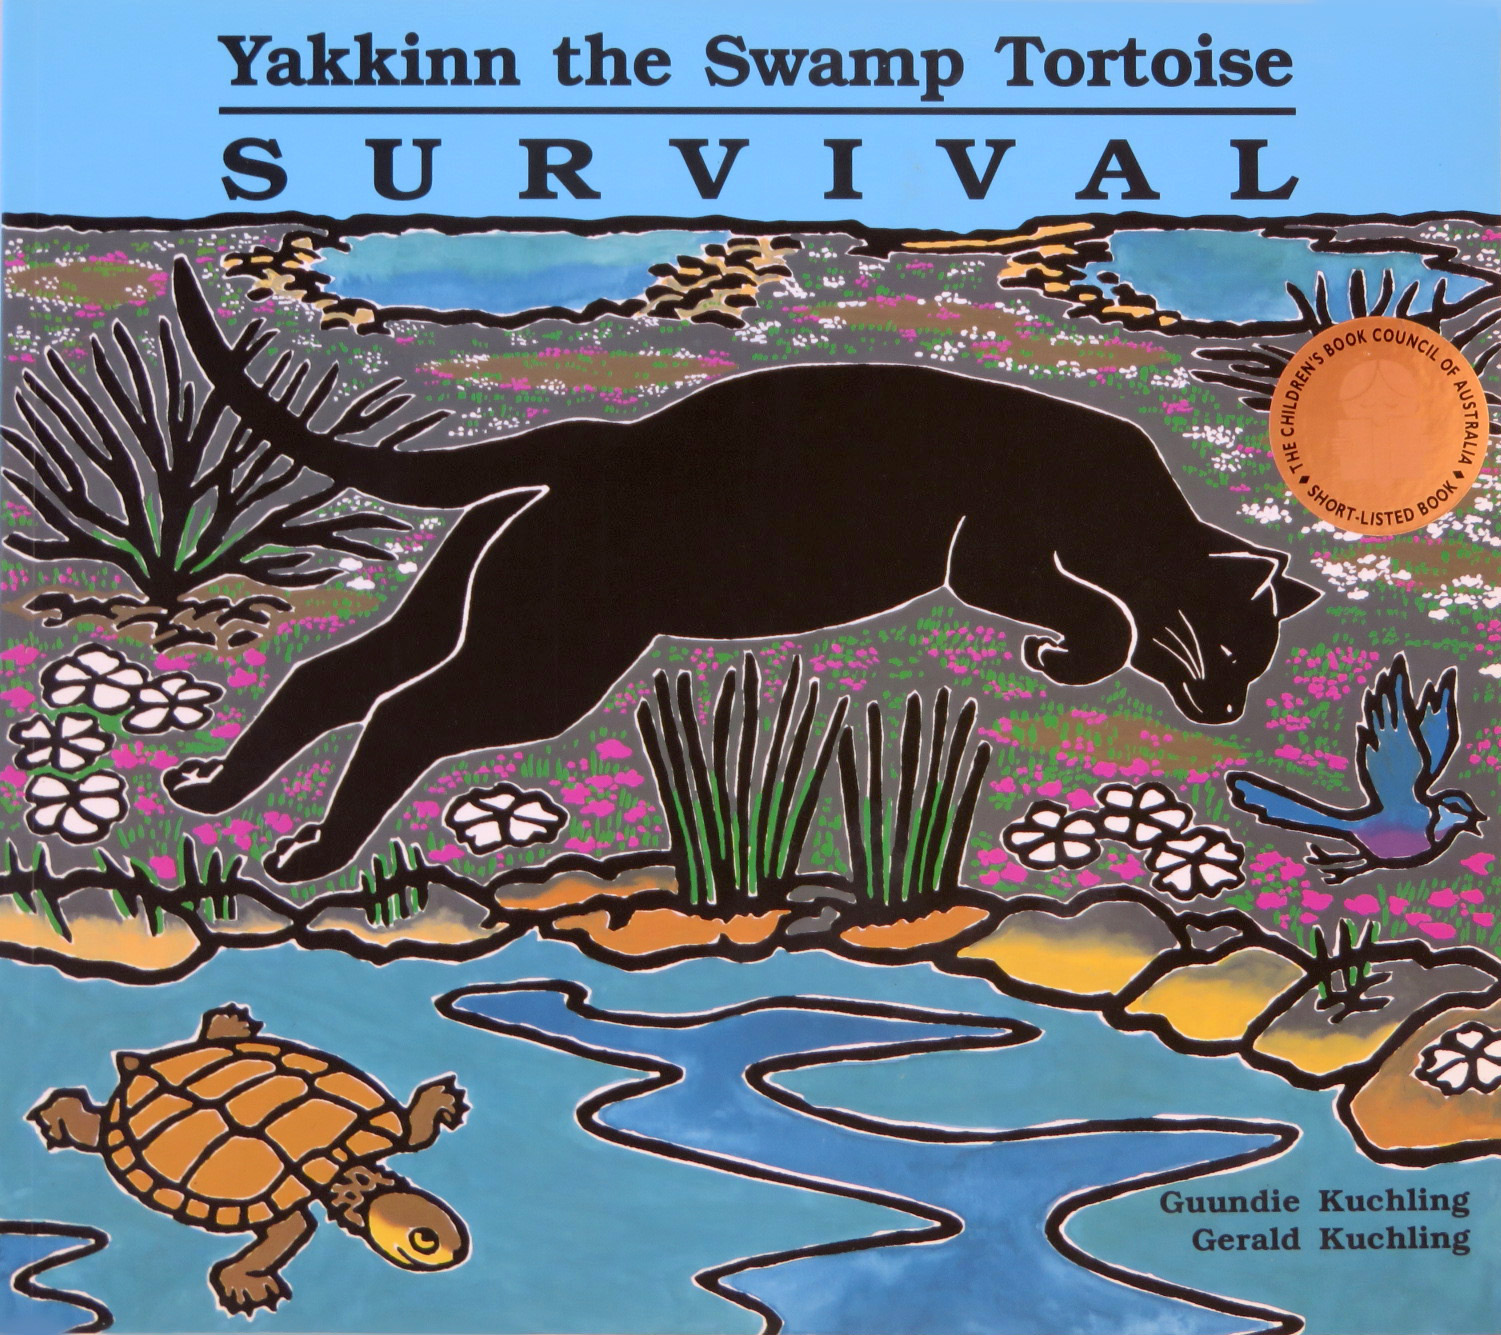 Yakkinn the Swamp Tortoise – Survival by Guundie Kuchling, Artist and Writer